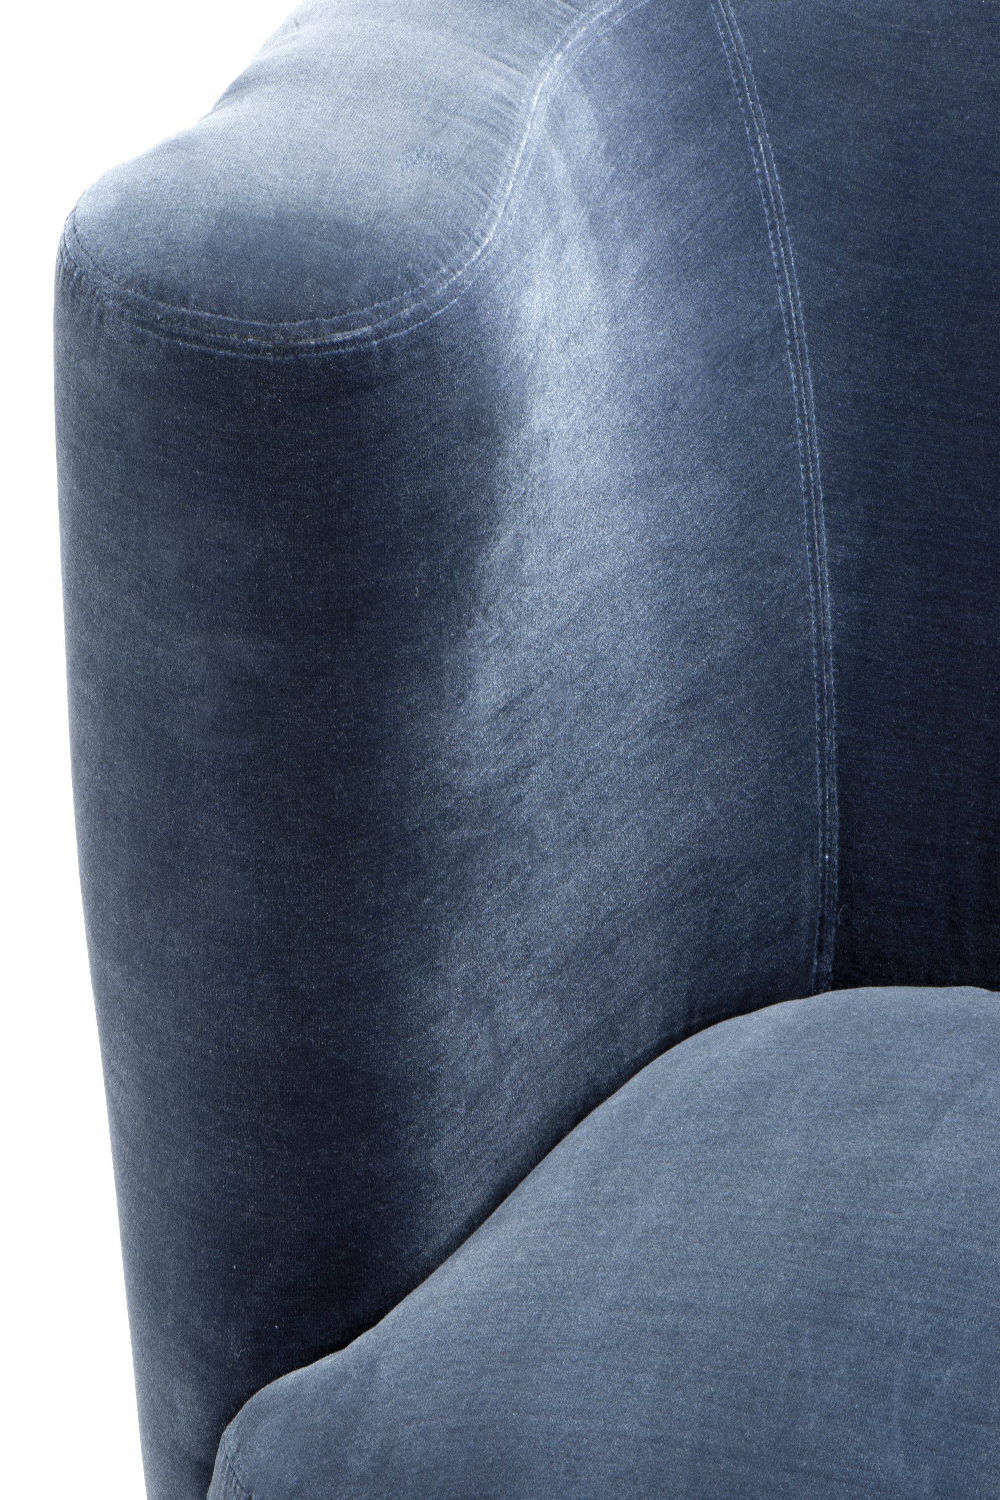 Blue Velvet Curved Back Chair | Eichholtz Khan | Oroa.com